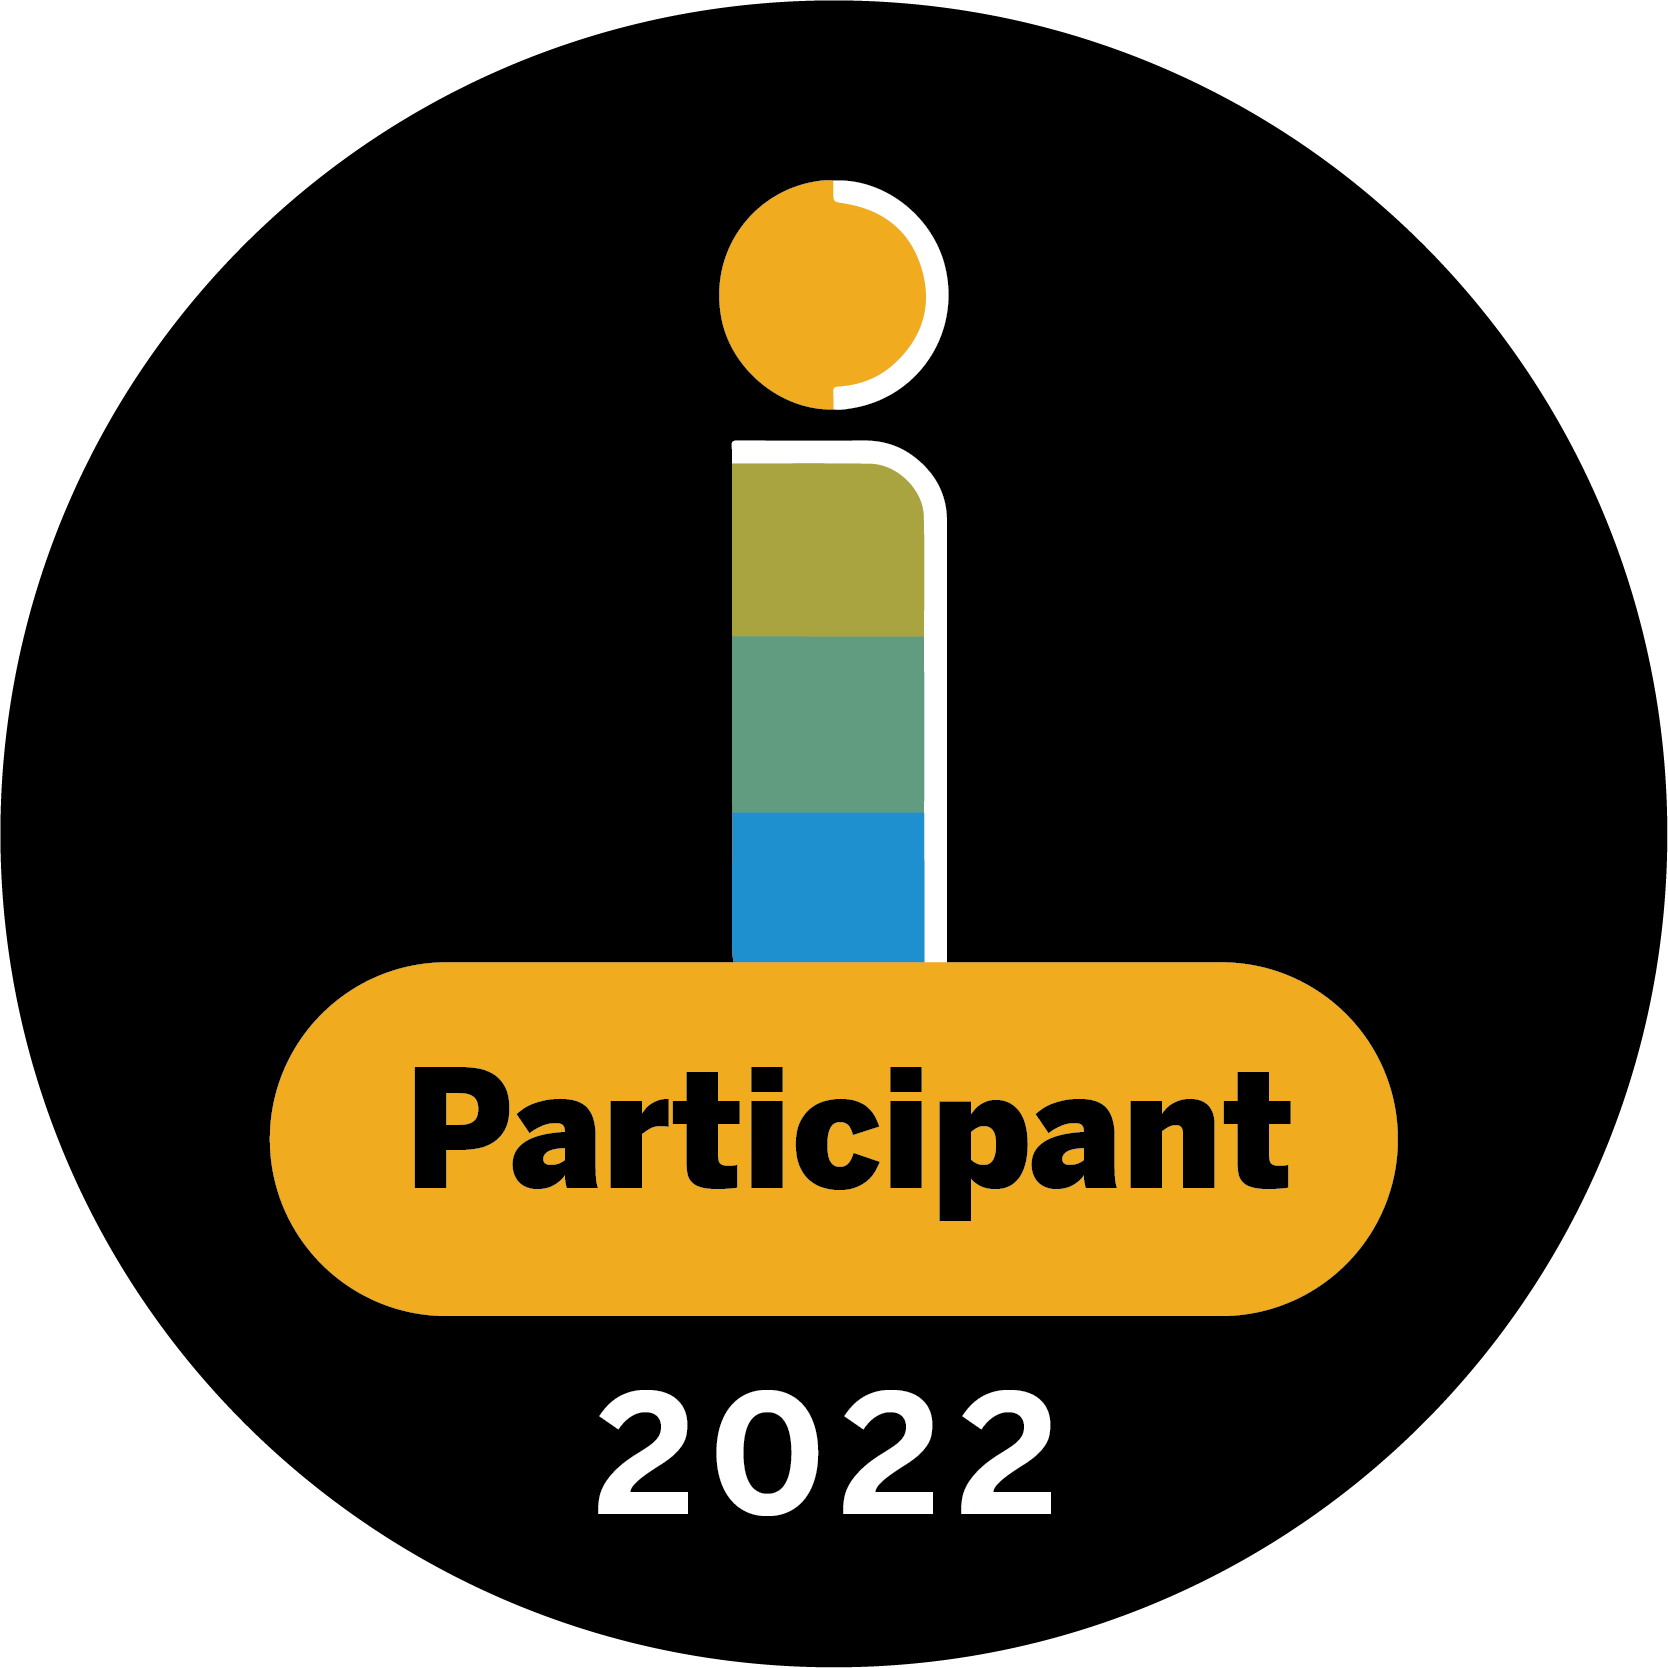 SAP Innovation Awards Contestant 2022